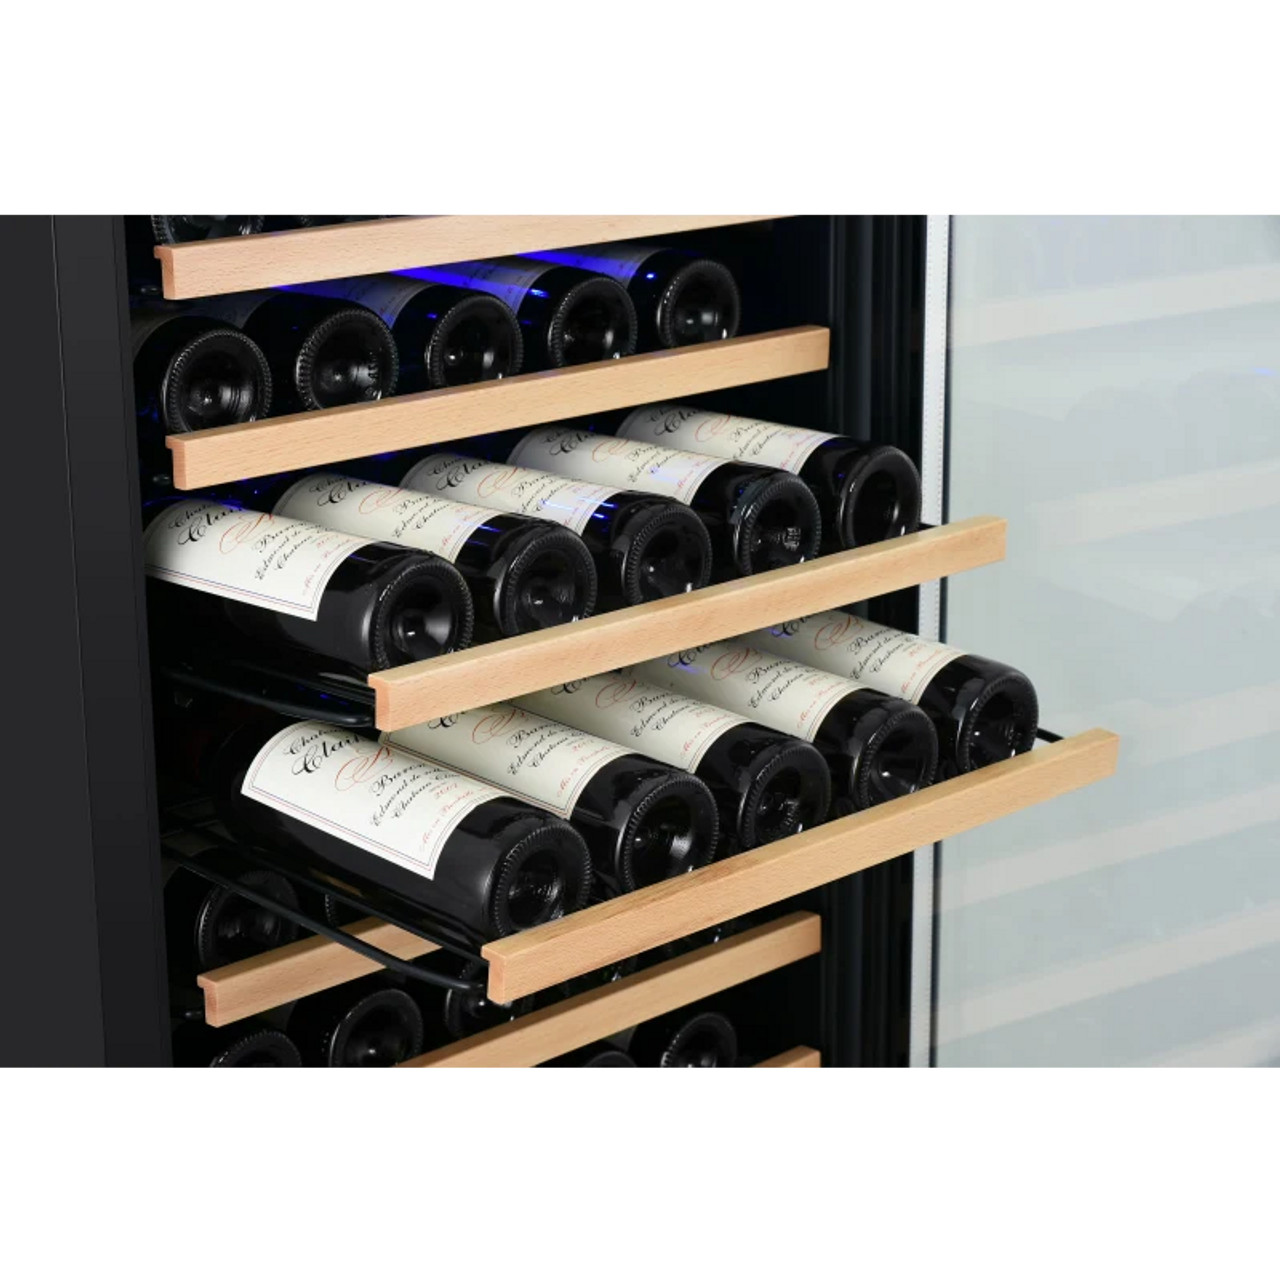 EdgeStar CWR1662SZ 24" 151 Bottle Capacity Free Standing Single Zone Wine Cooler